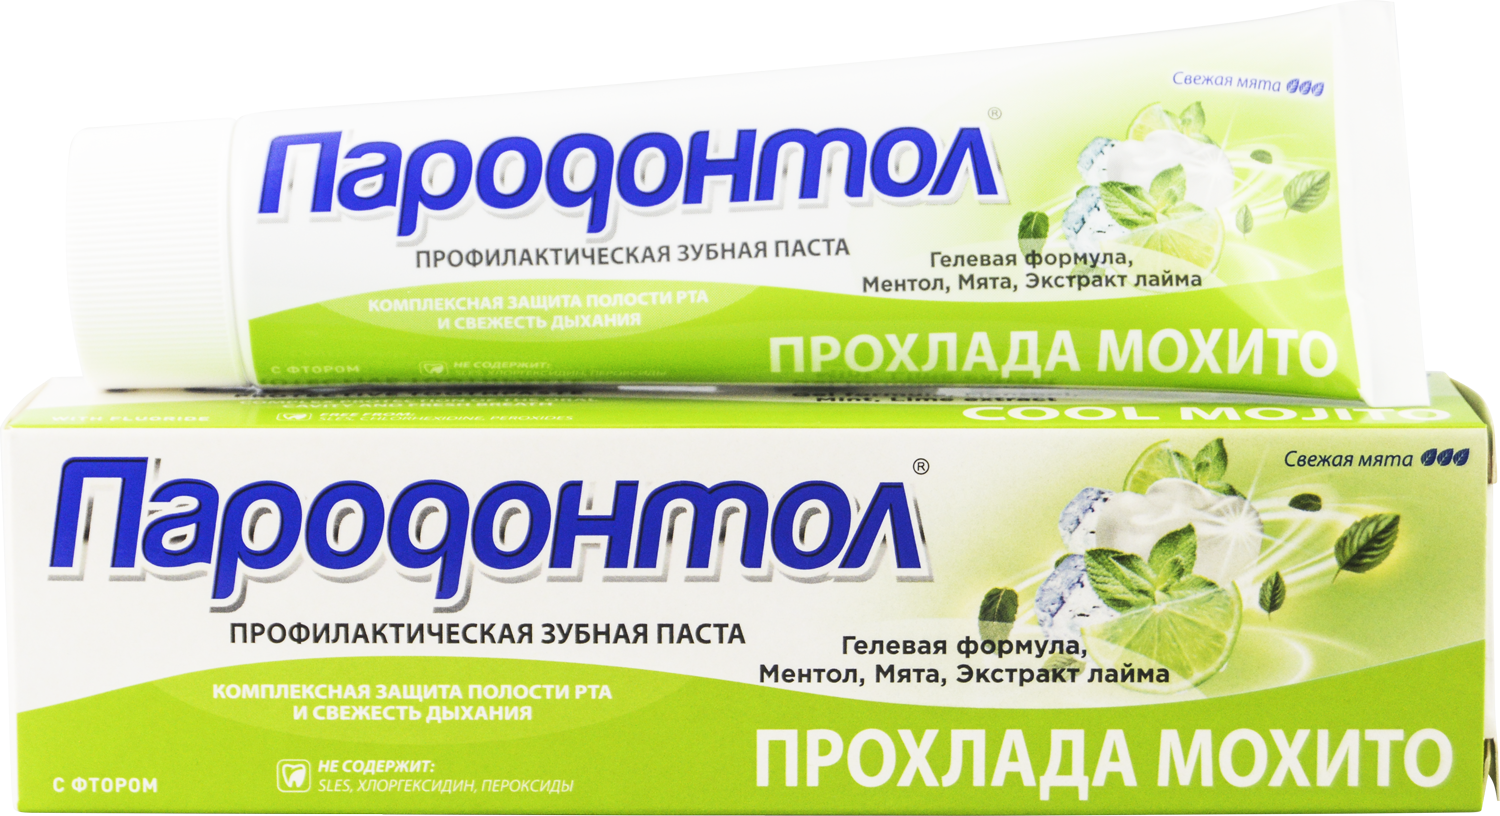 Зубная паста "Пародонтол" ("Parodontol") Прохлада Мохито 124 гр.